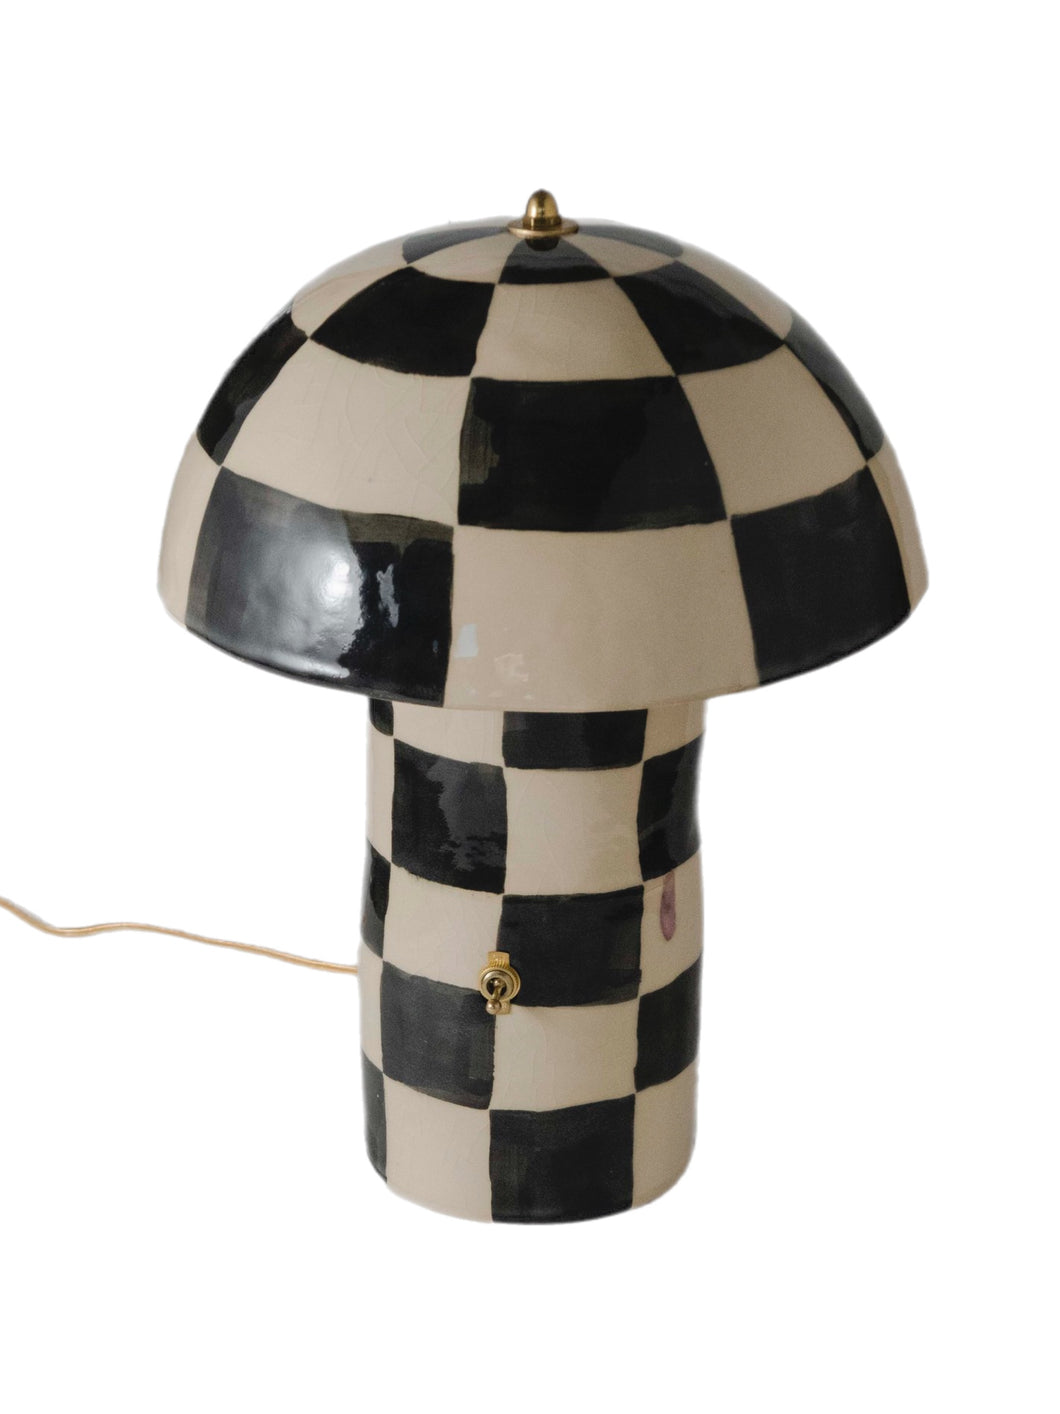 Trippy Mushroom Lamp